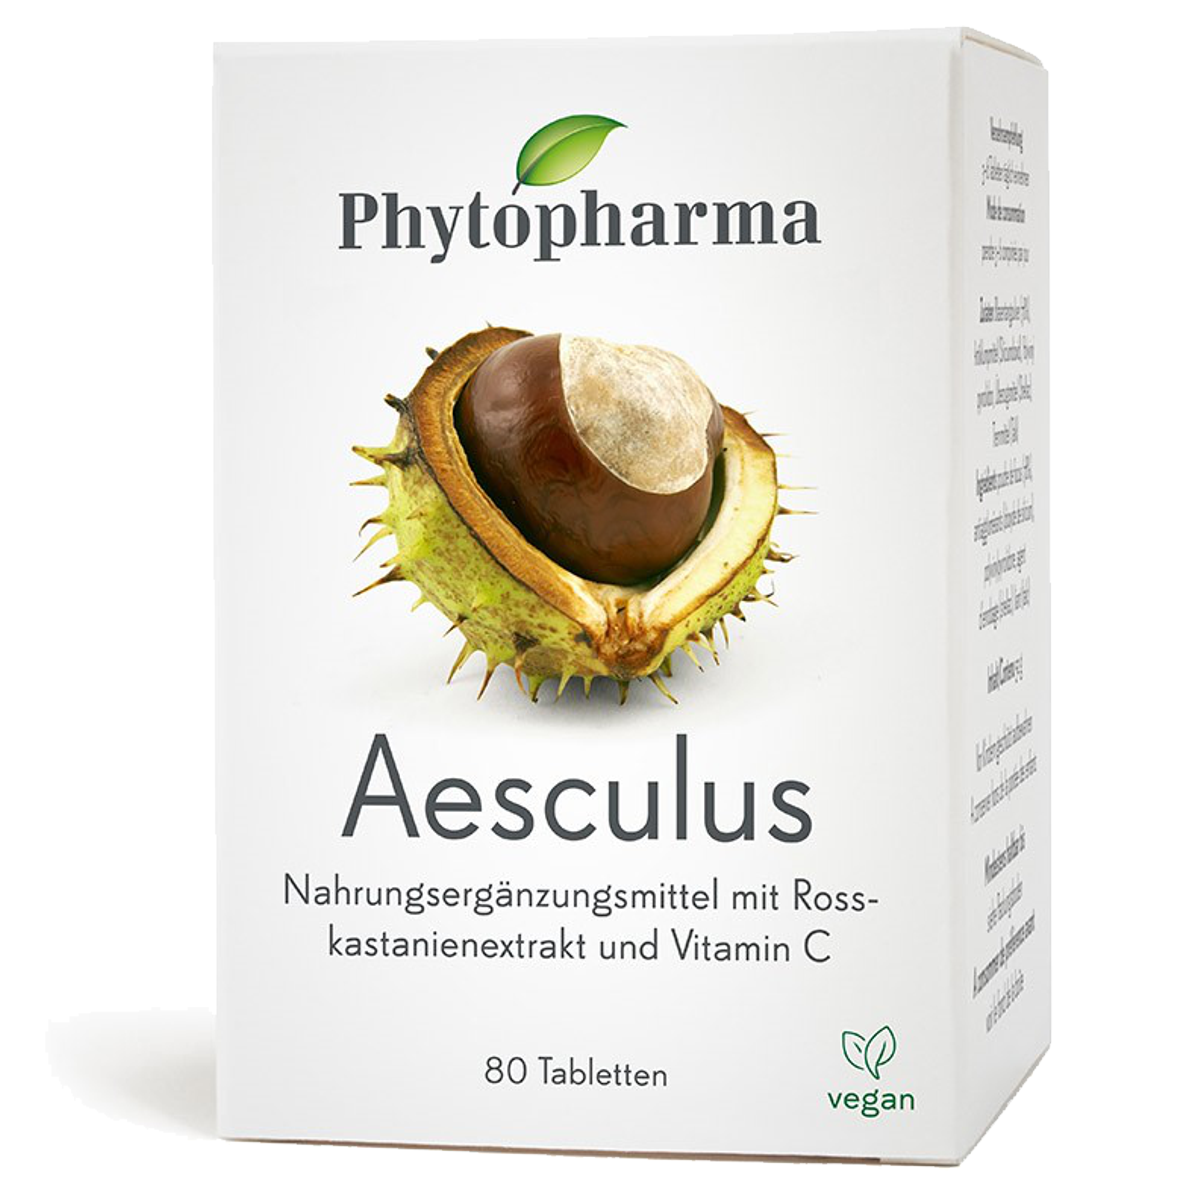 Phytopharma Aesculus Tabletten Dose 80 Stück